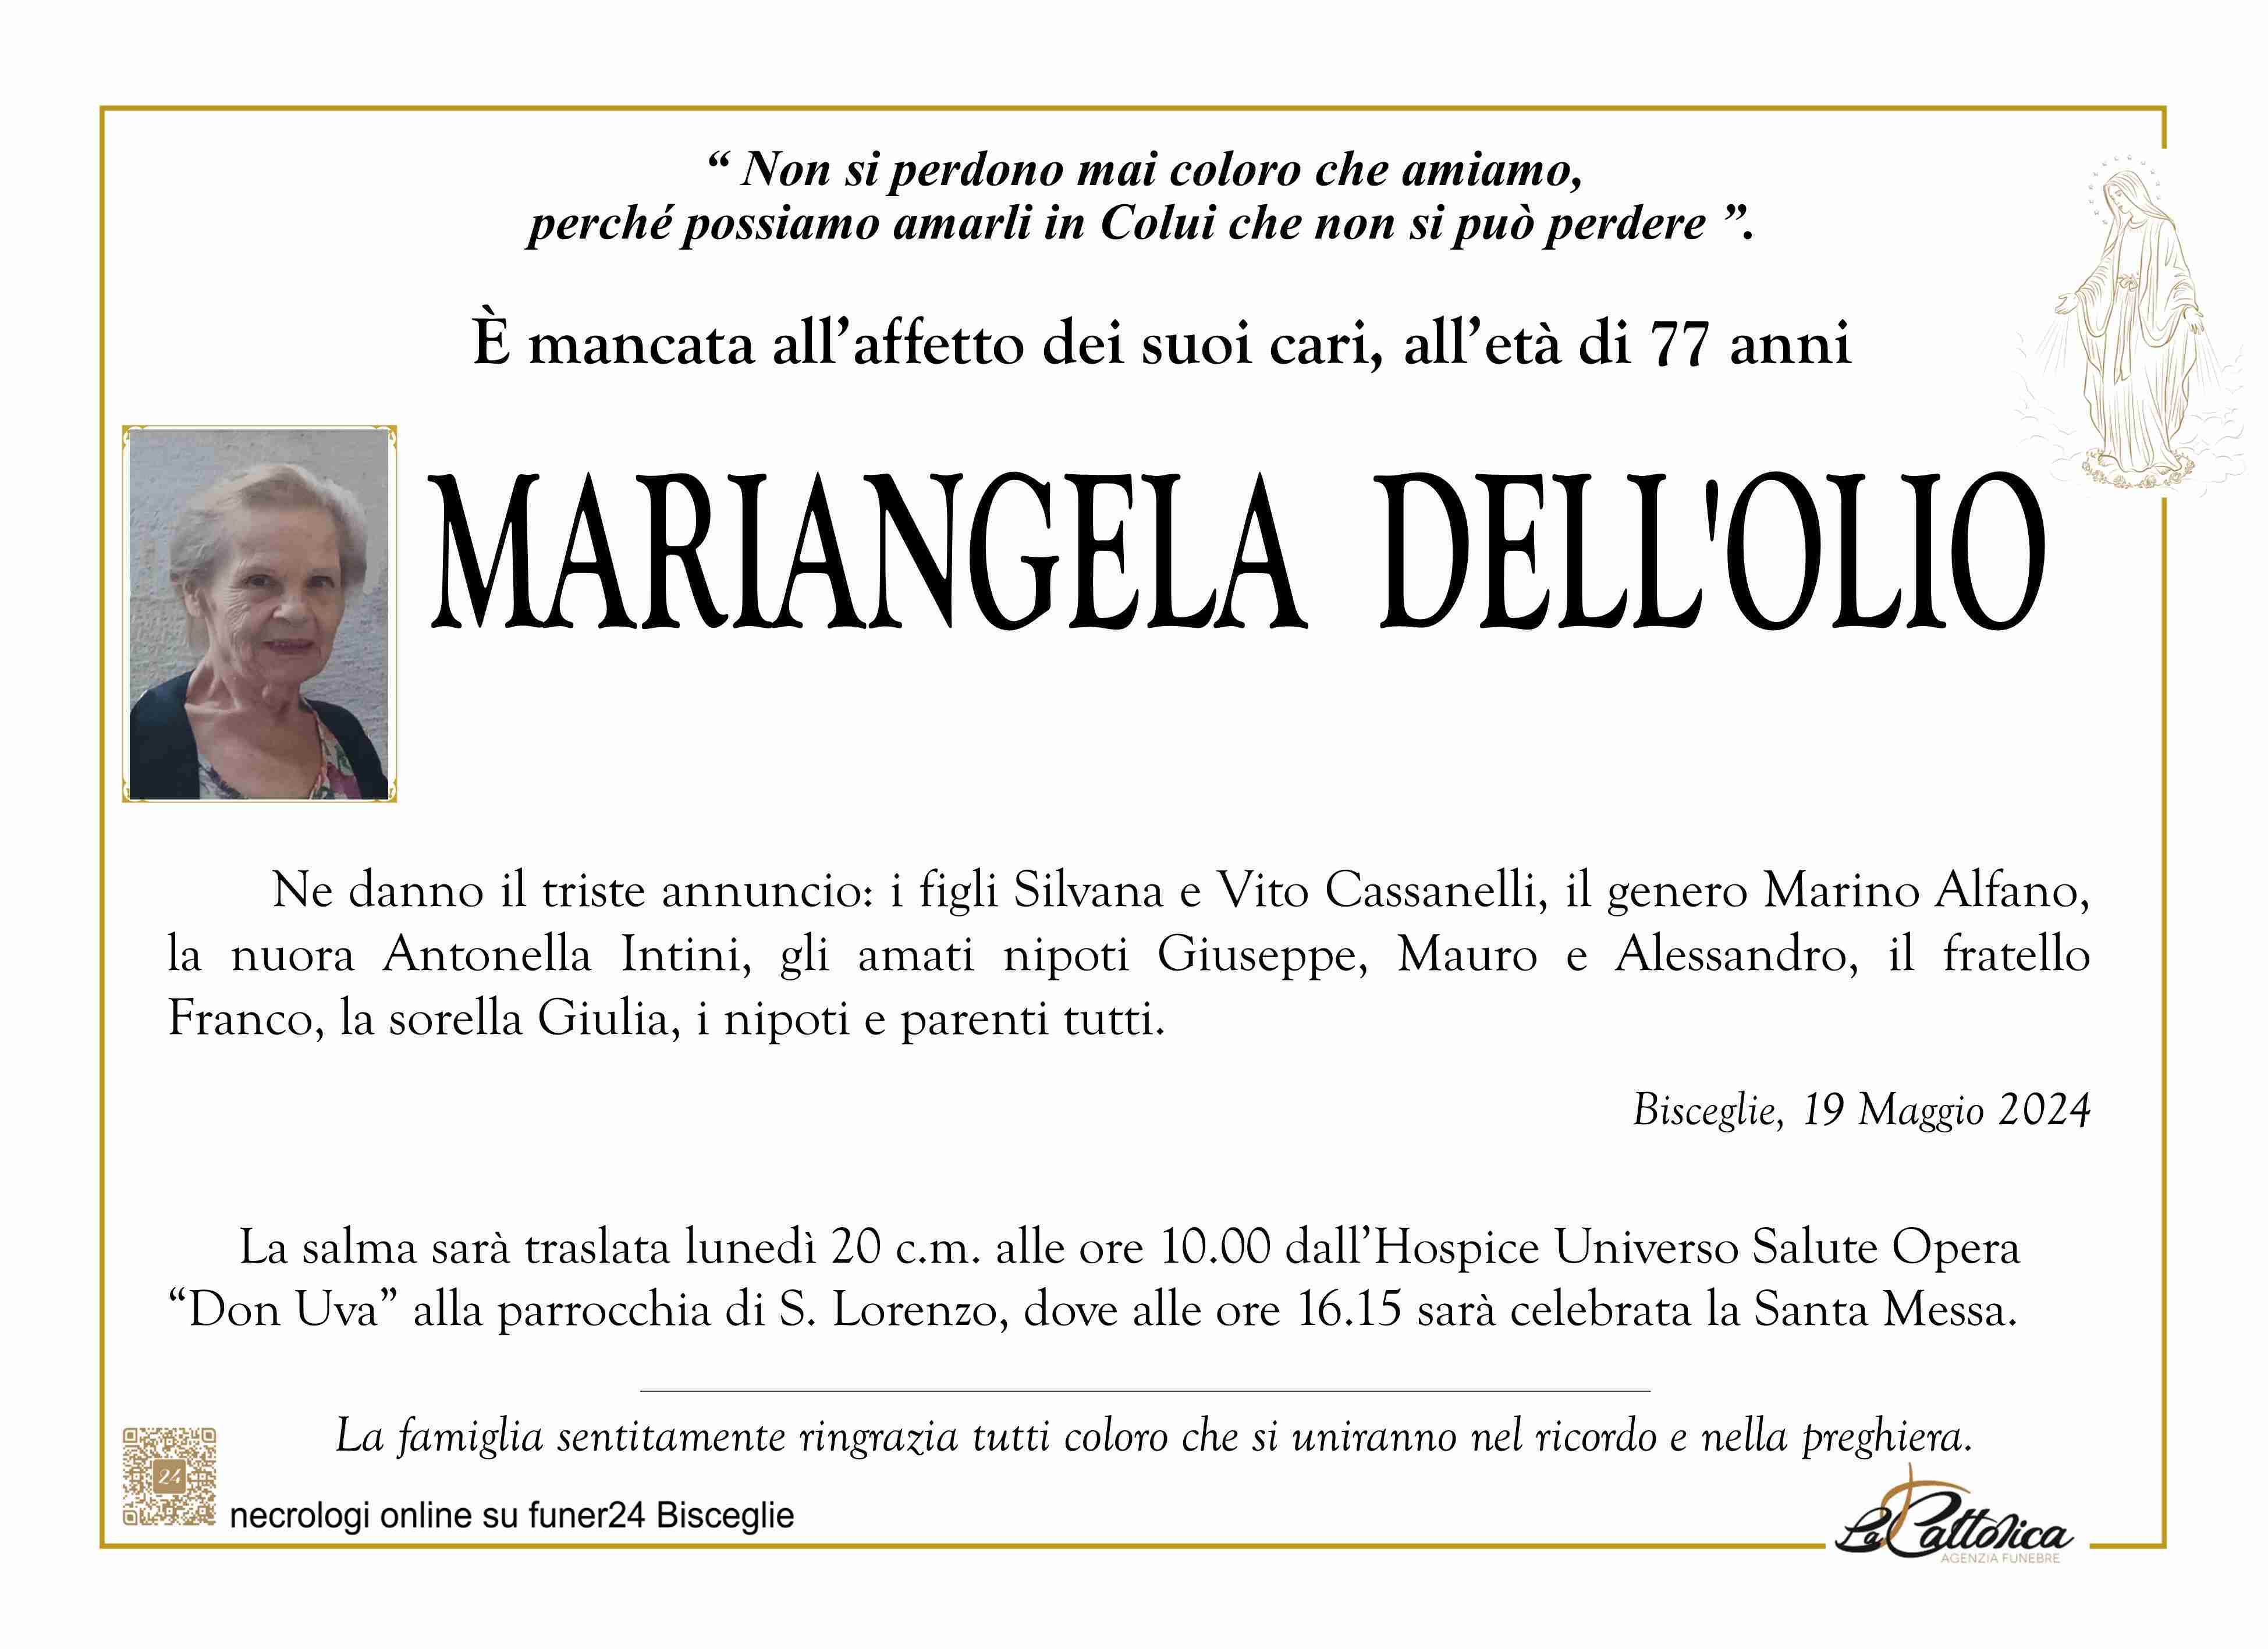 Mariangela Dell'Olio